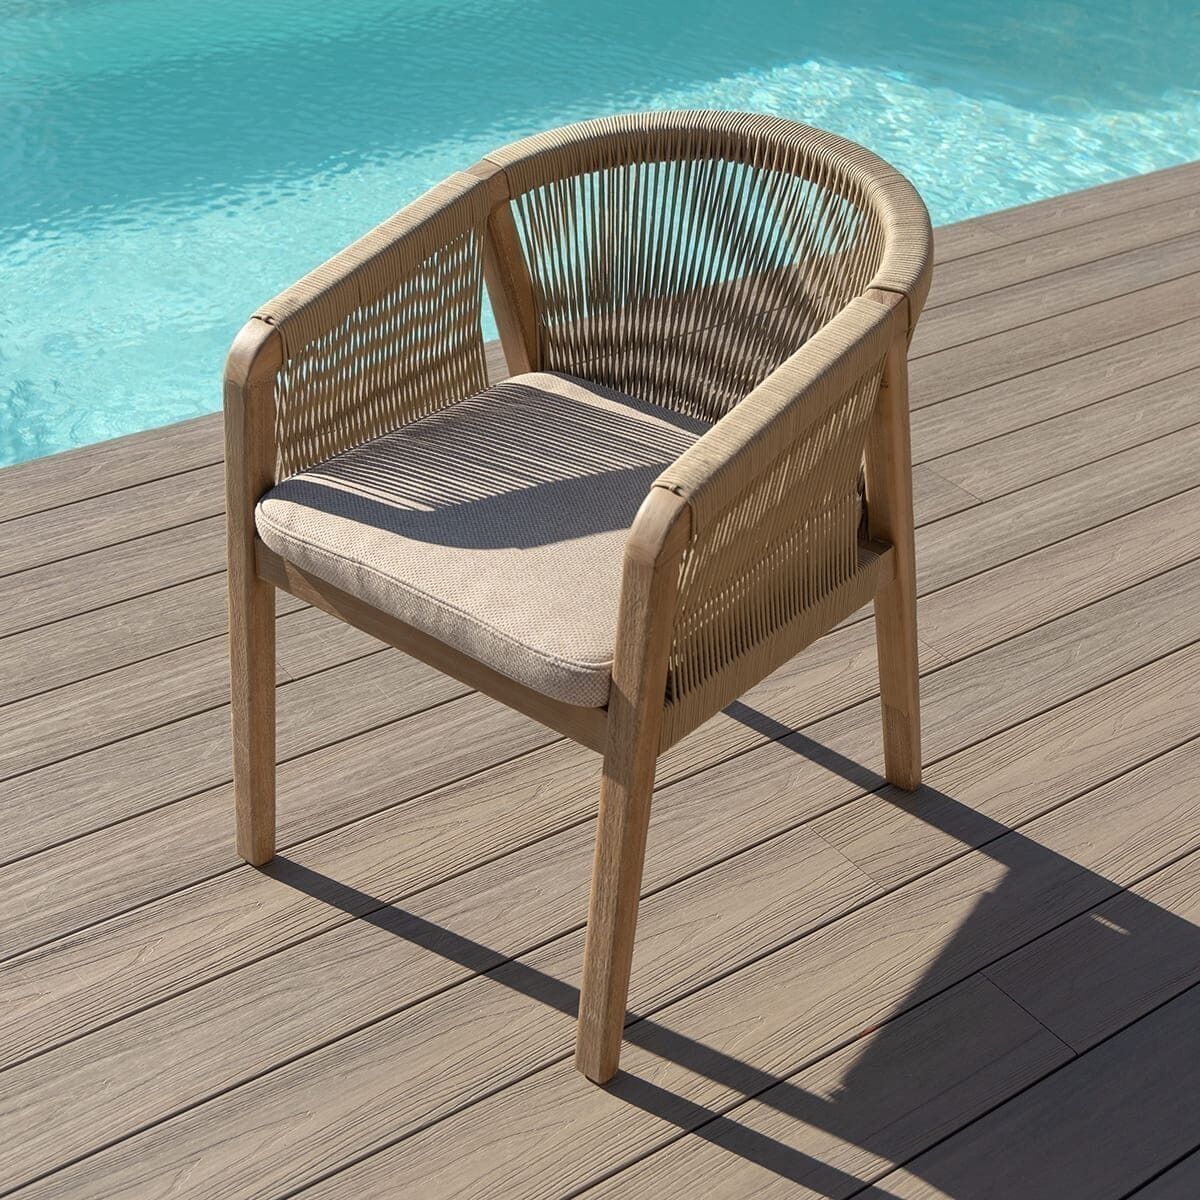 Maze - Martinique Rope Weave 8 Seat Rectangular Dining Set product image